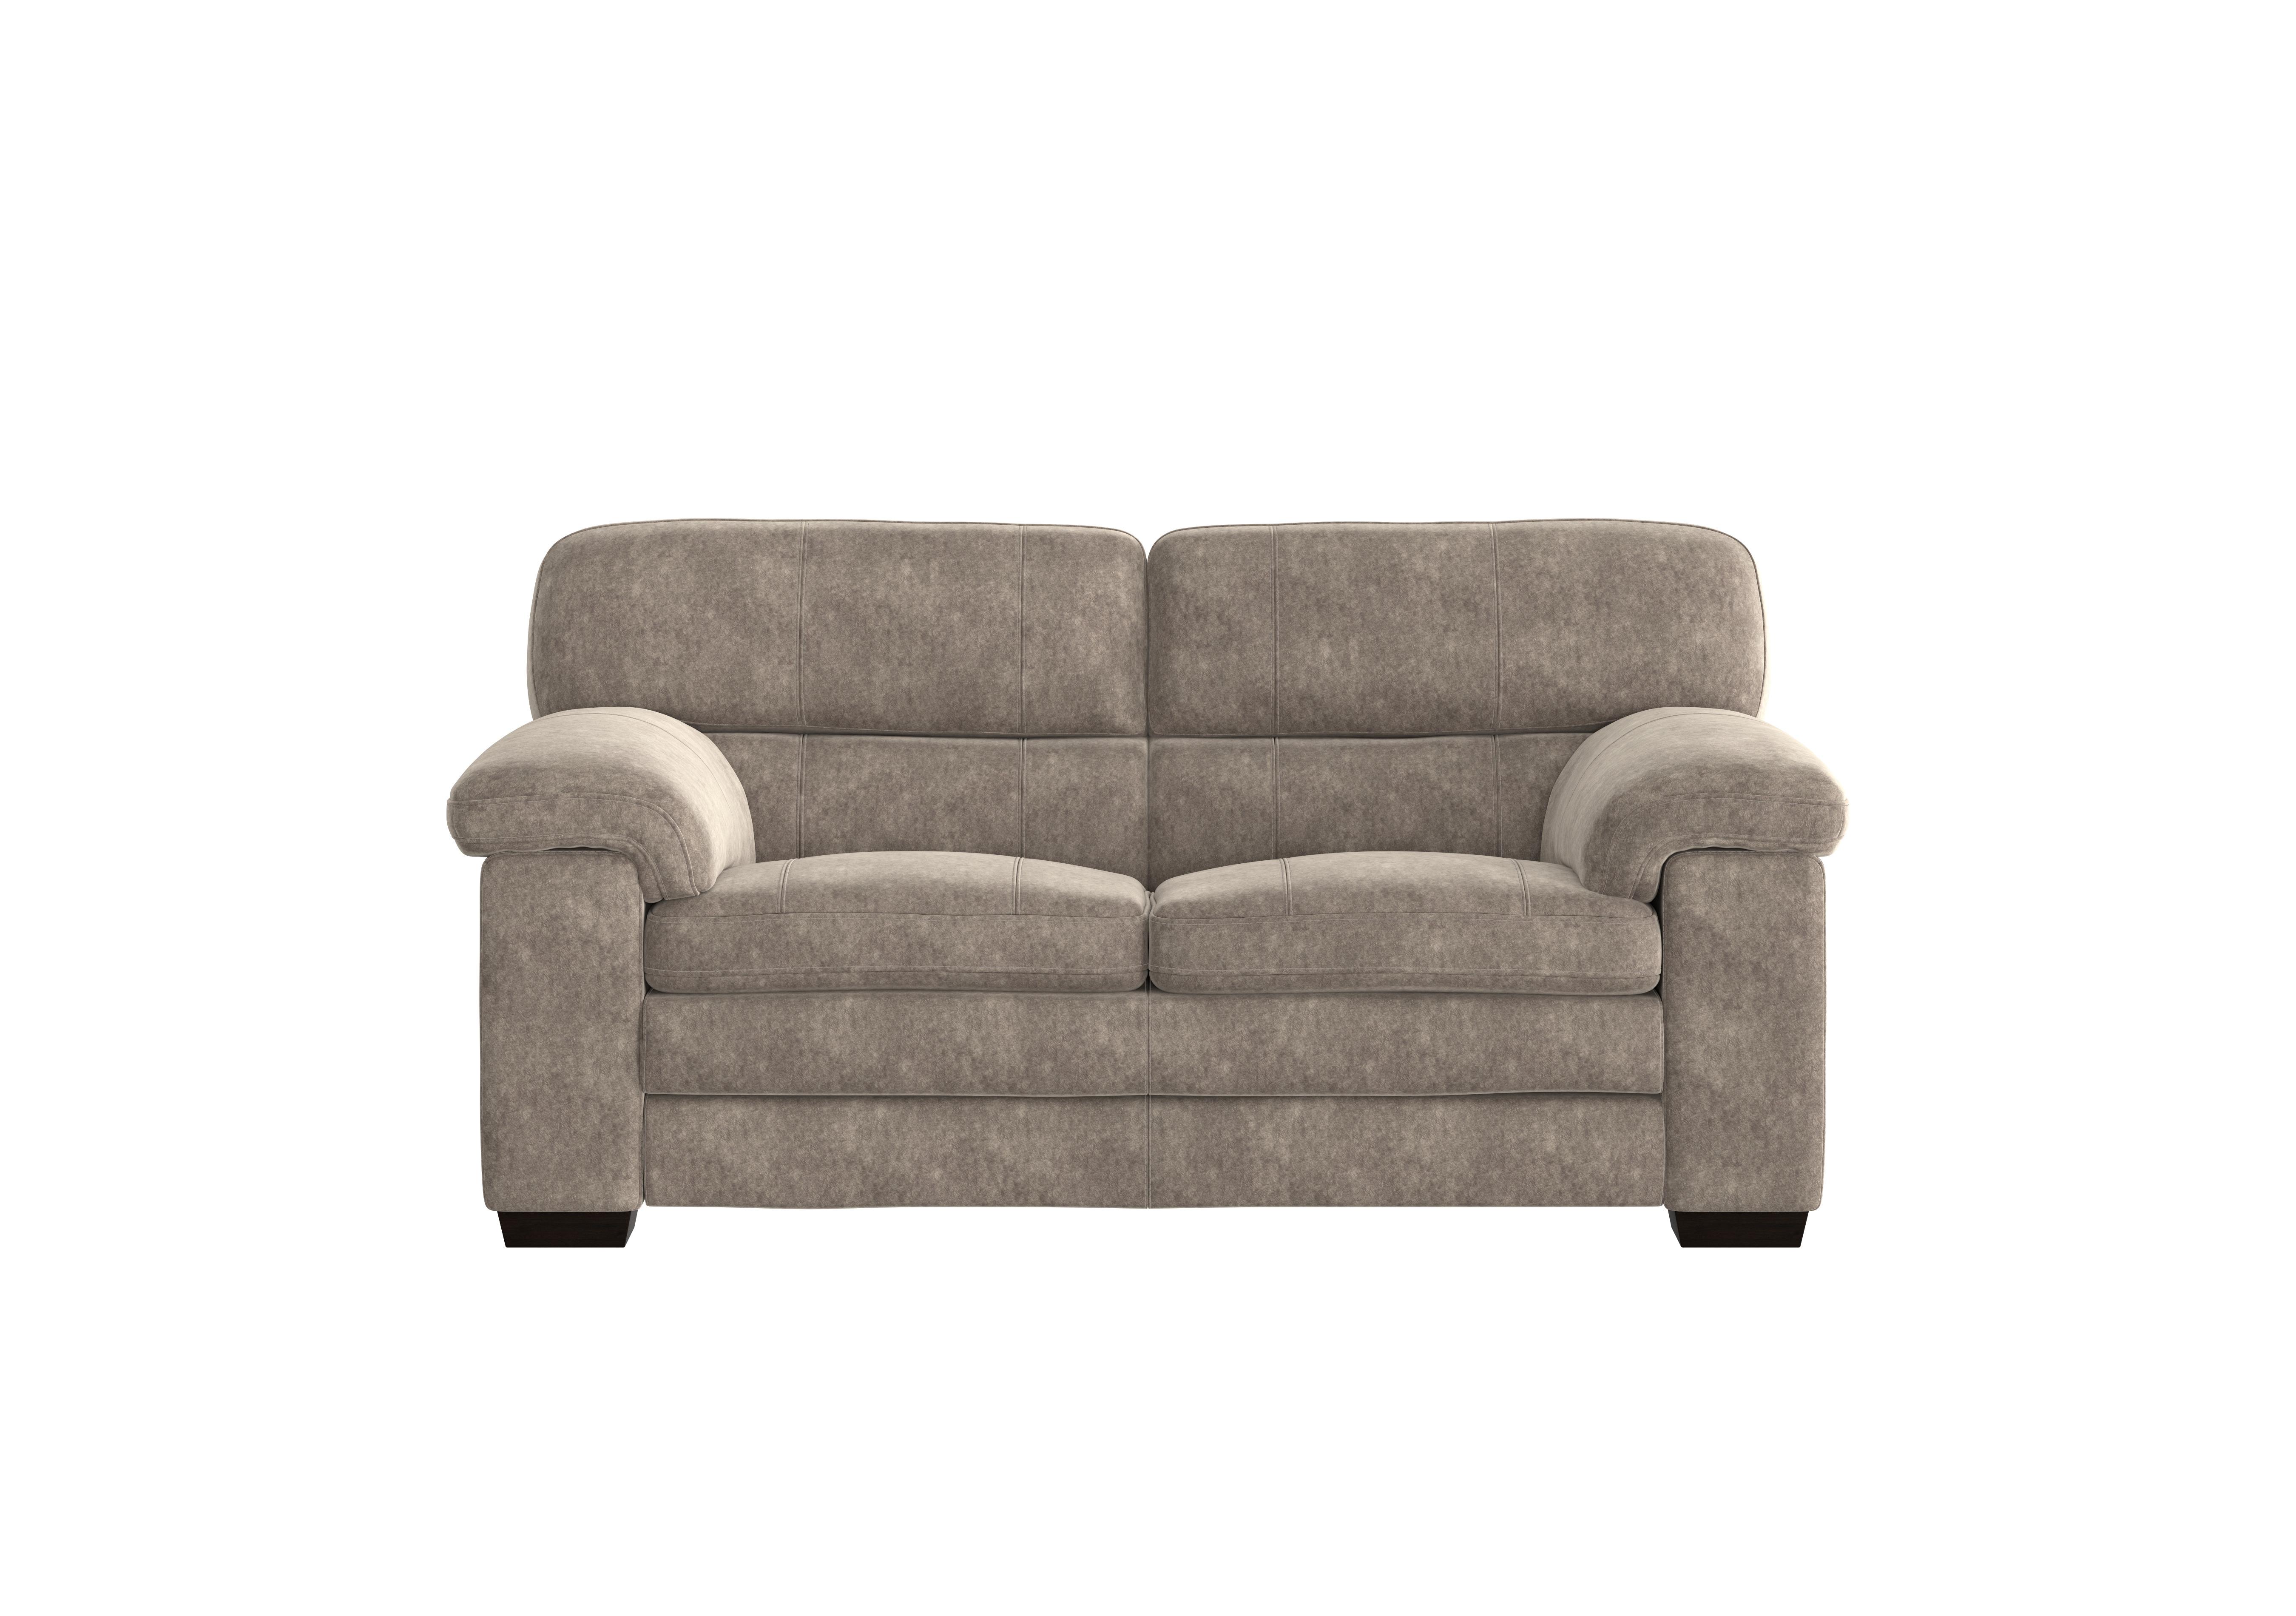 Cozee Fabric 2 Seater Sofa in Bfa-Bnn-R29 Fv1 Mink on Furniture Village